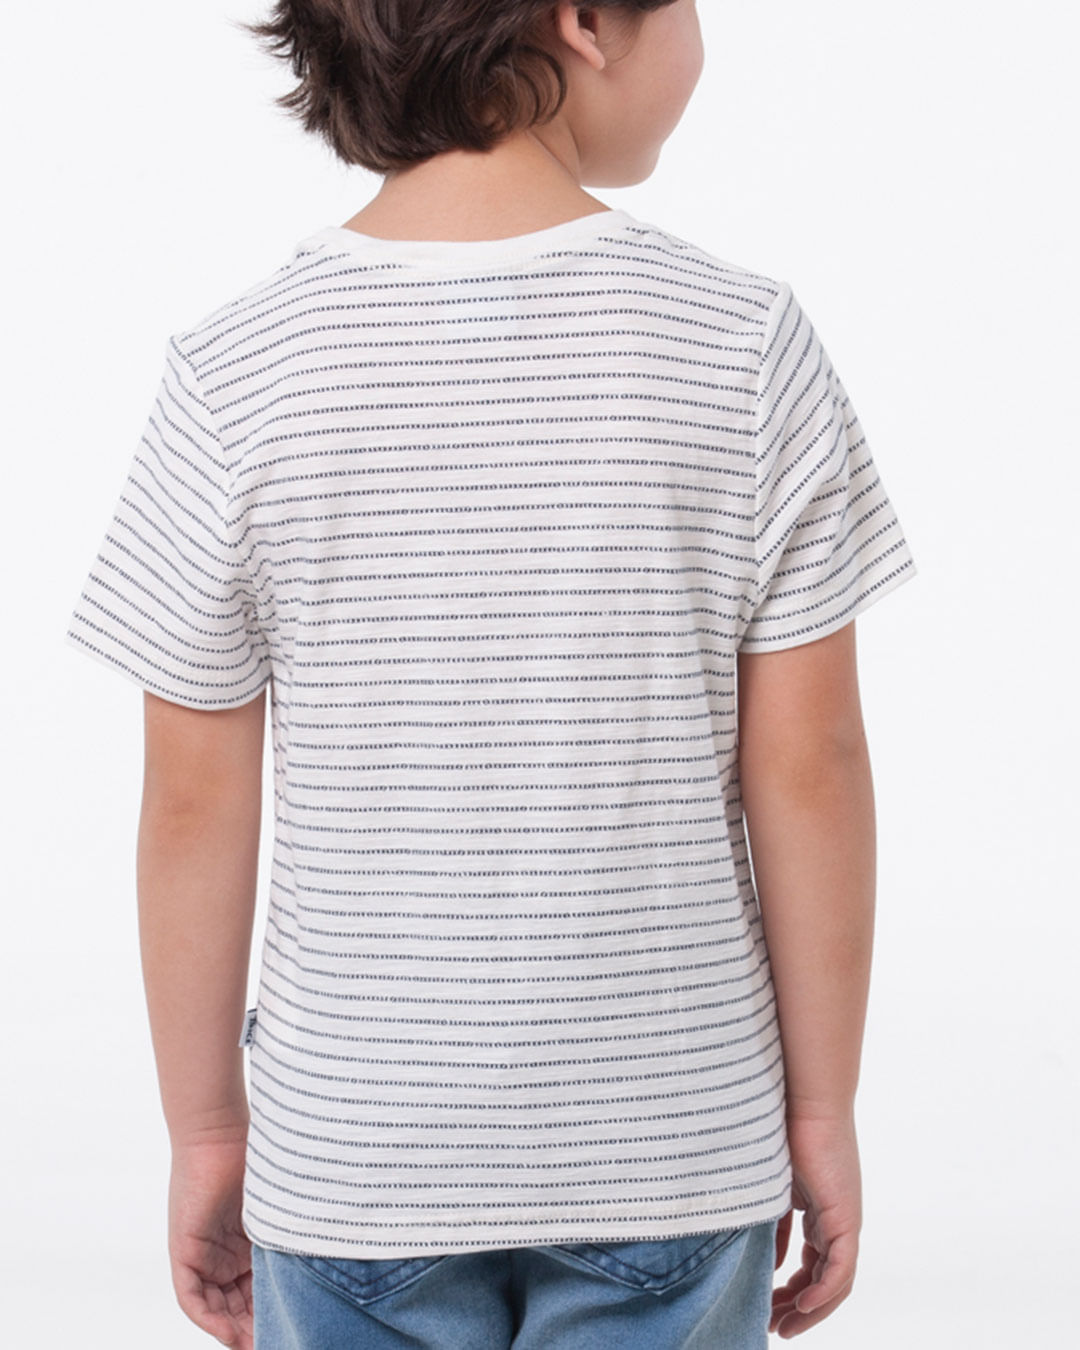 Camiseta-Infantil-Malha-Listrada-Bolso-Off-White